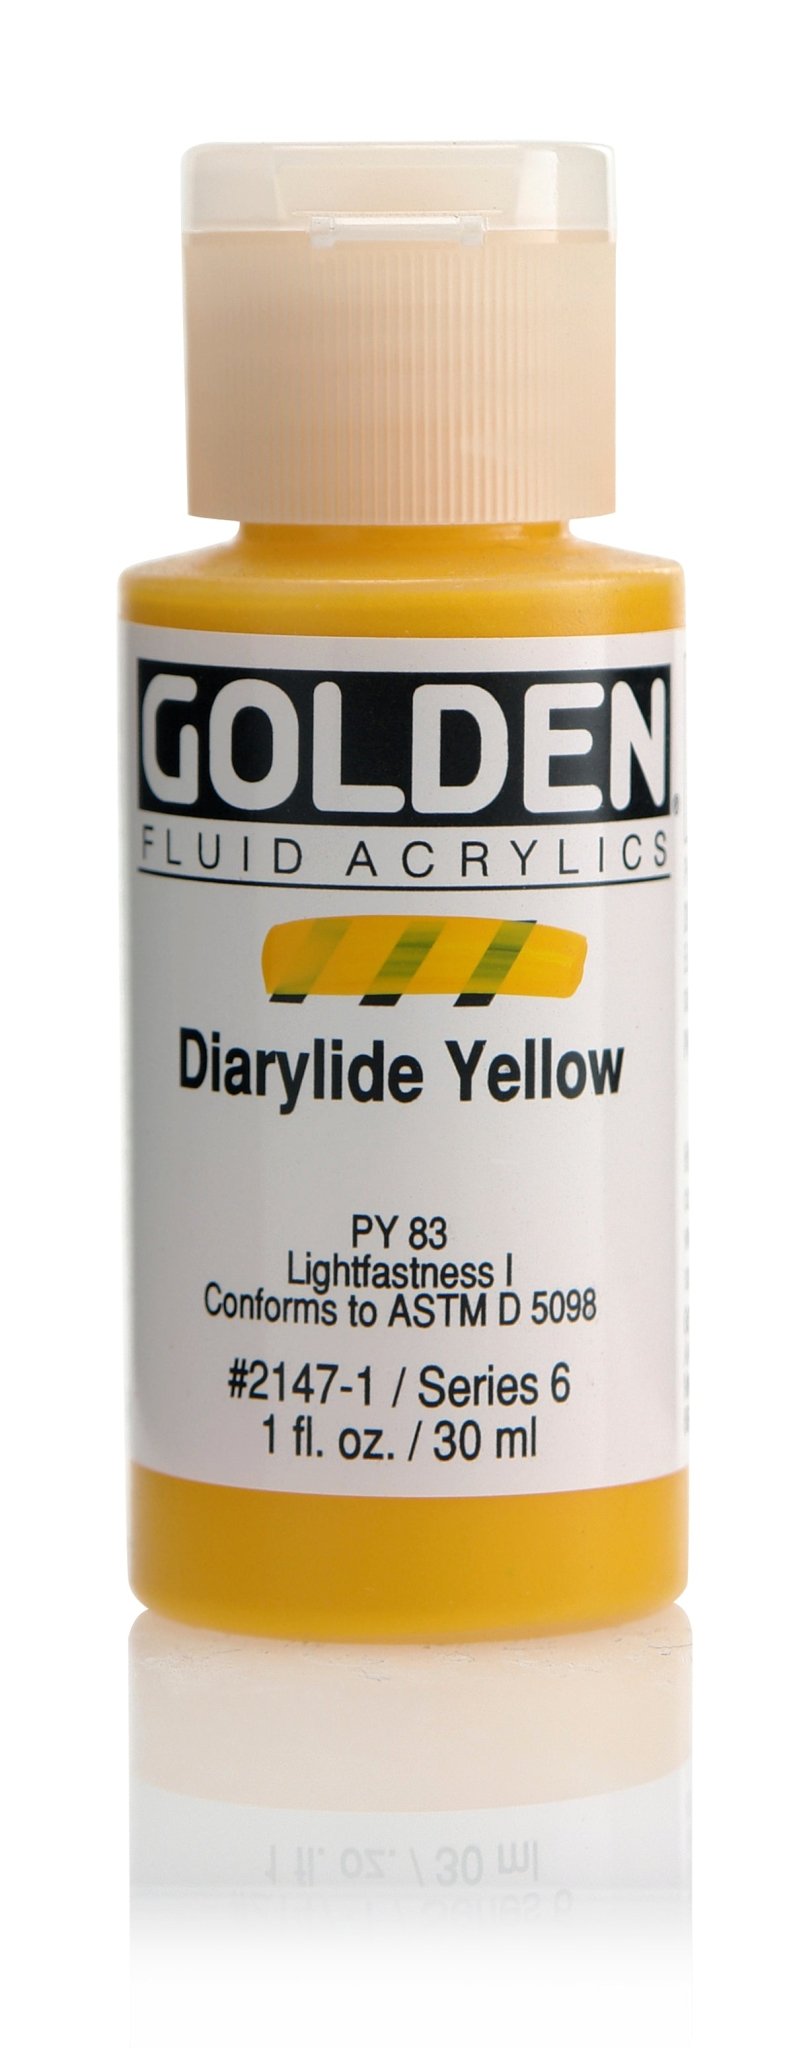 Golden Fluid Acrylics - Diarylide Yellow - 30ml - Create A Little Magic (Pty) Ltd